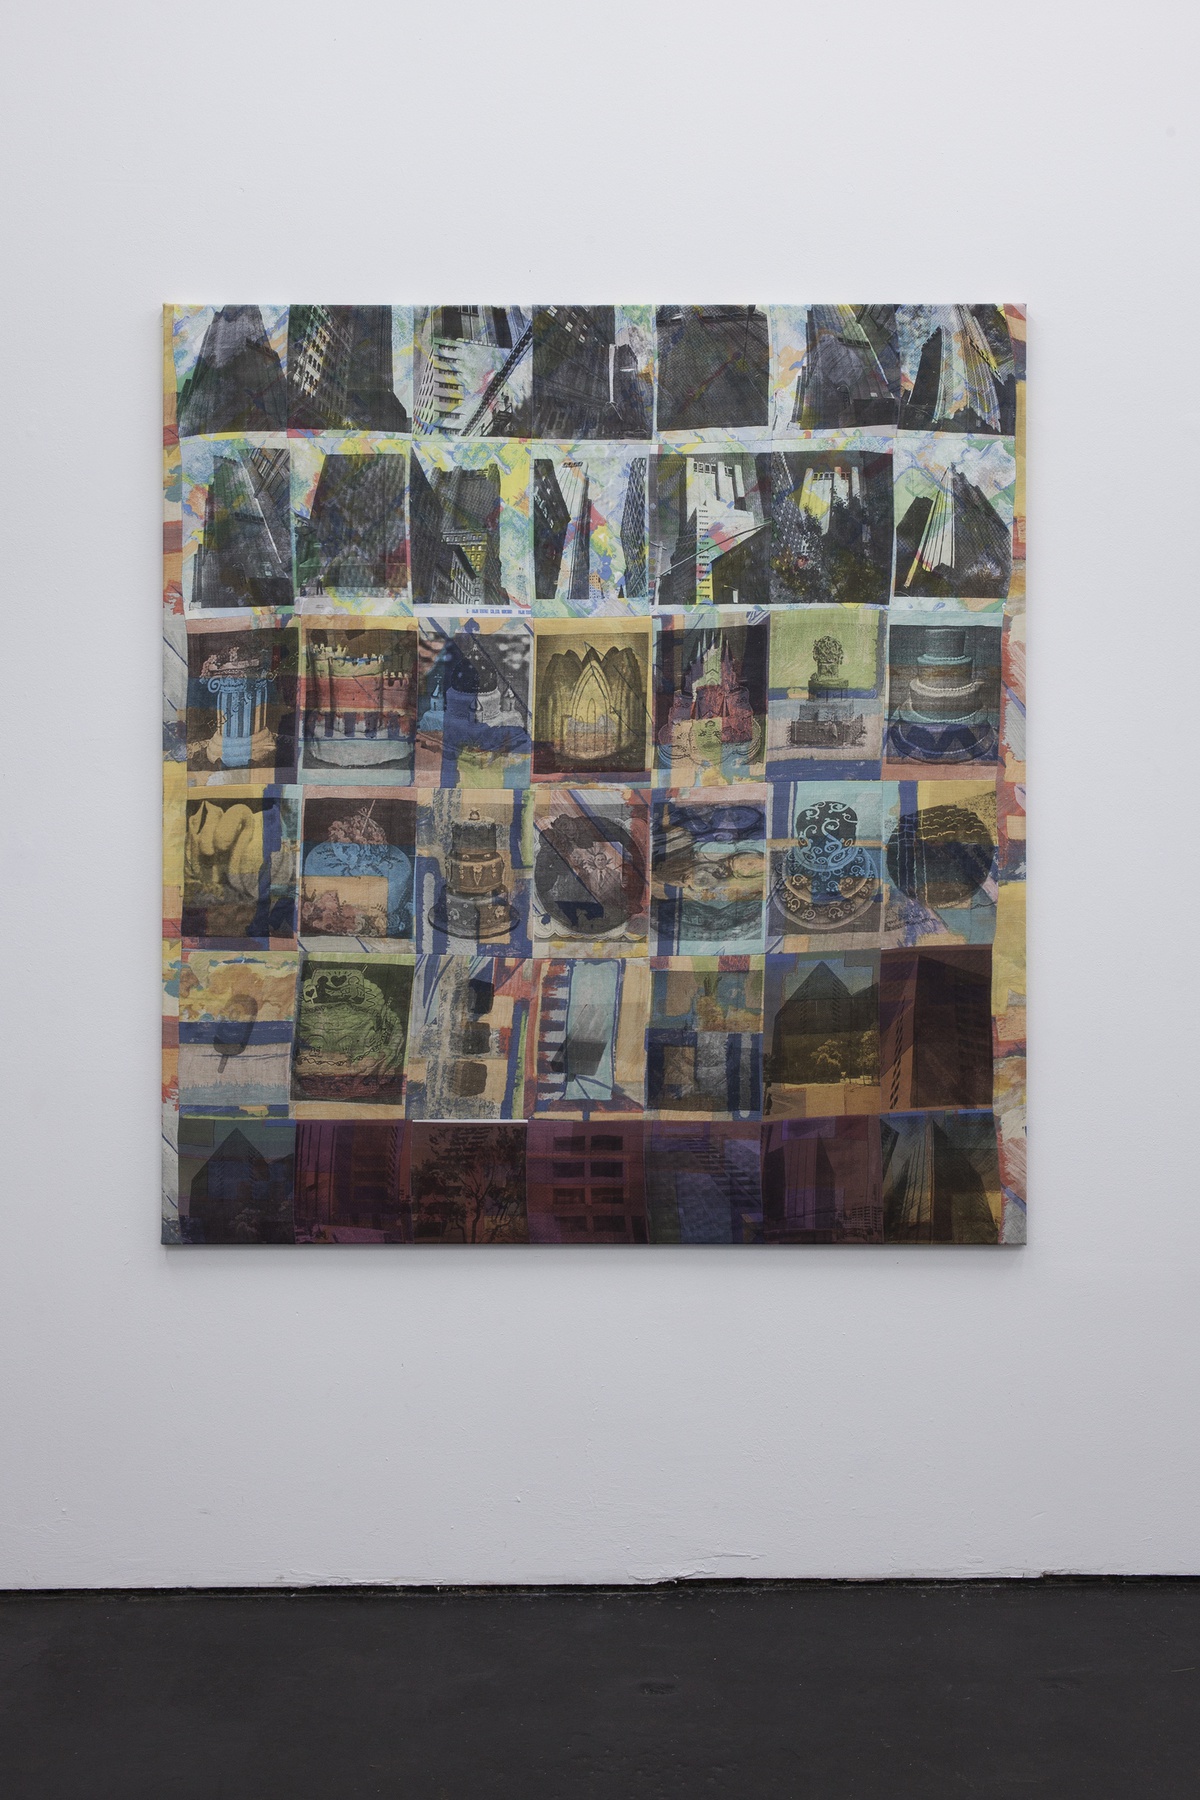 Stephen Suckale, Period Craze, 2019laser print on linen140 x 150 cm